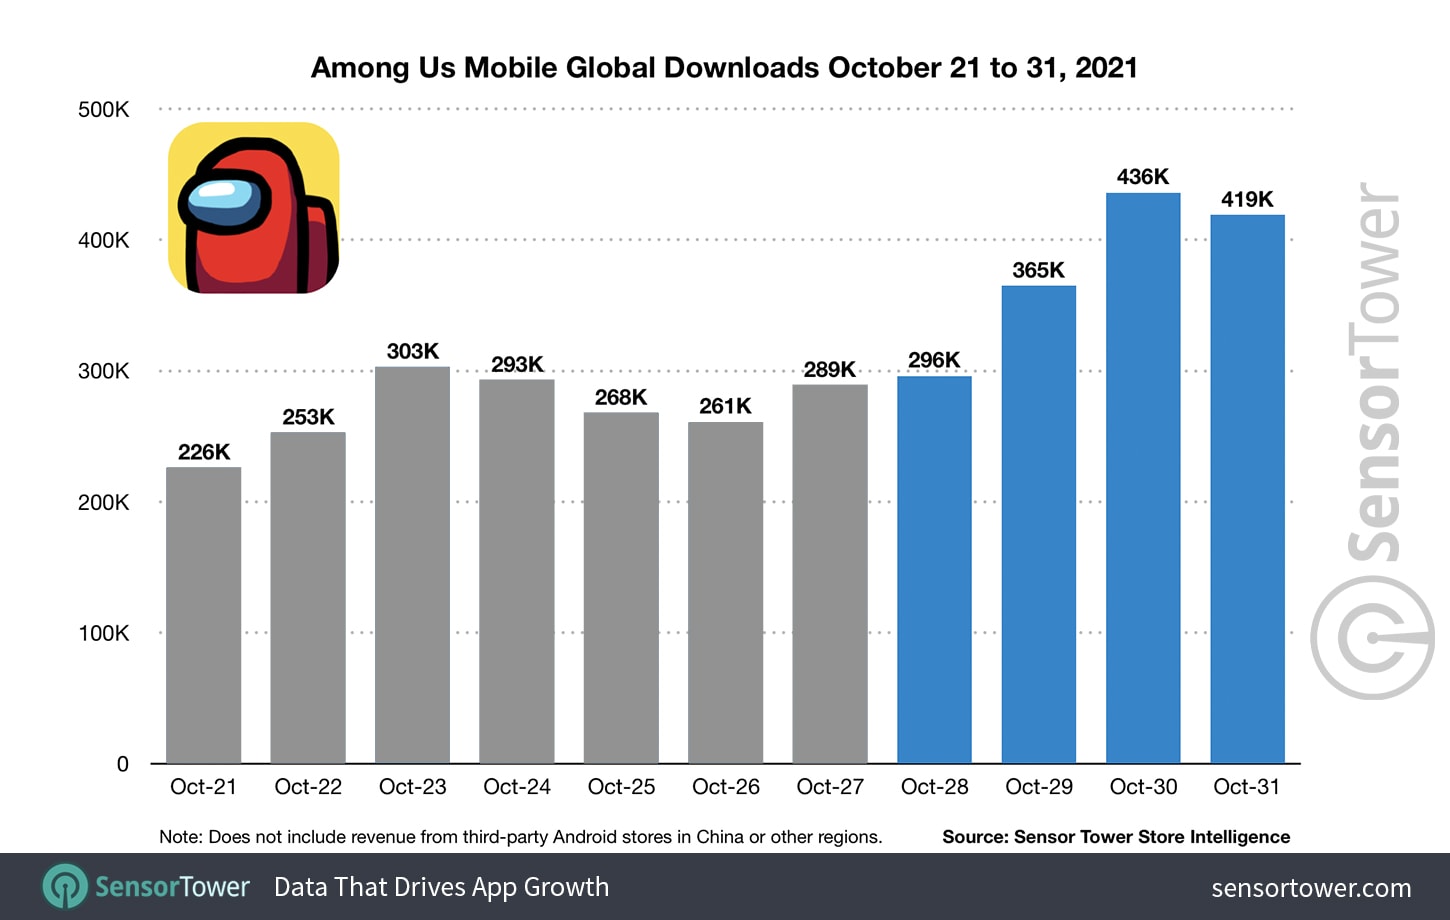 Mobile global downloads October 2021